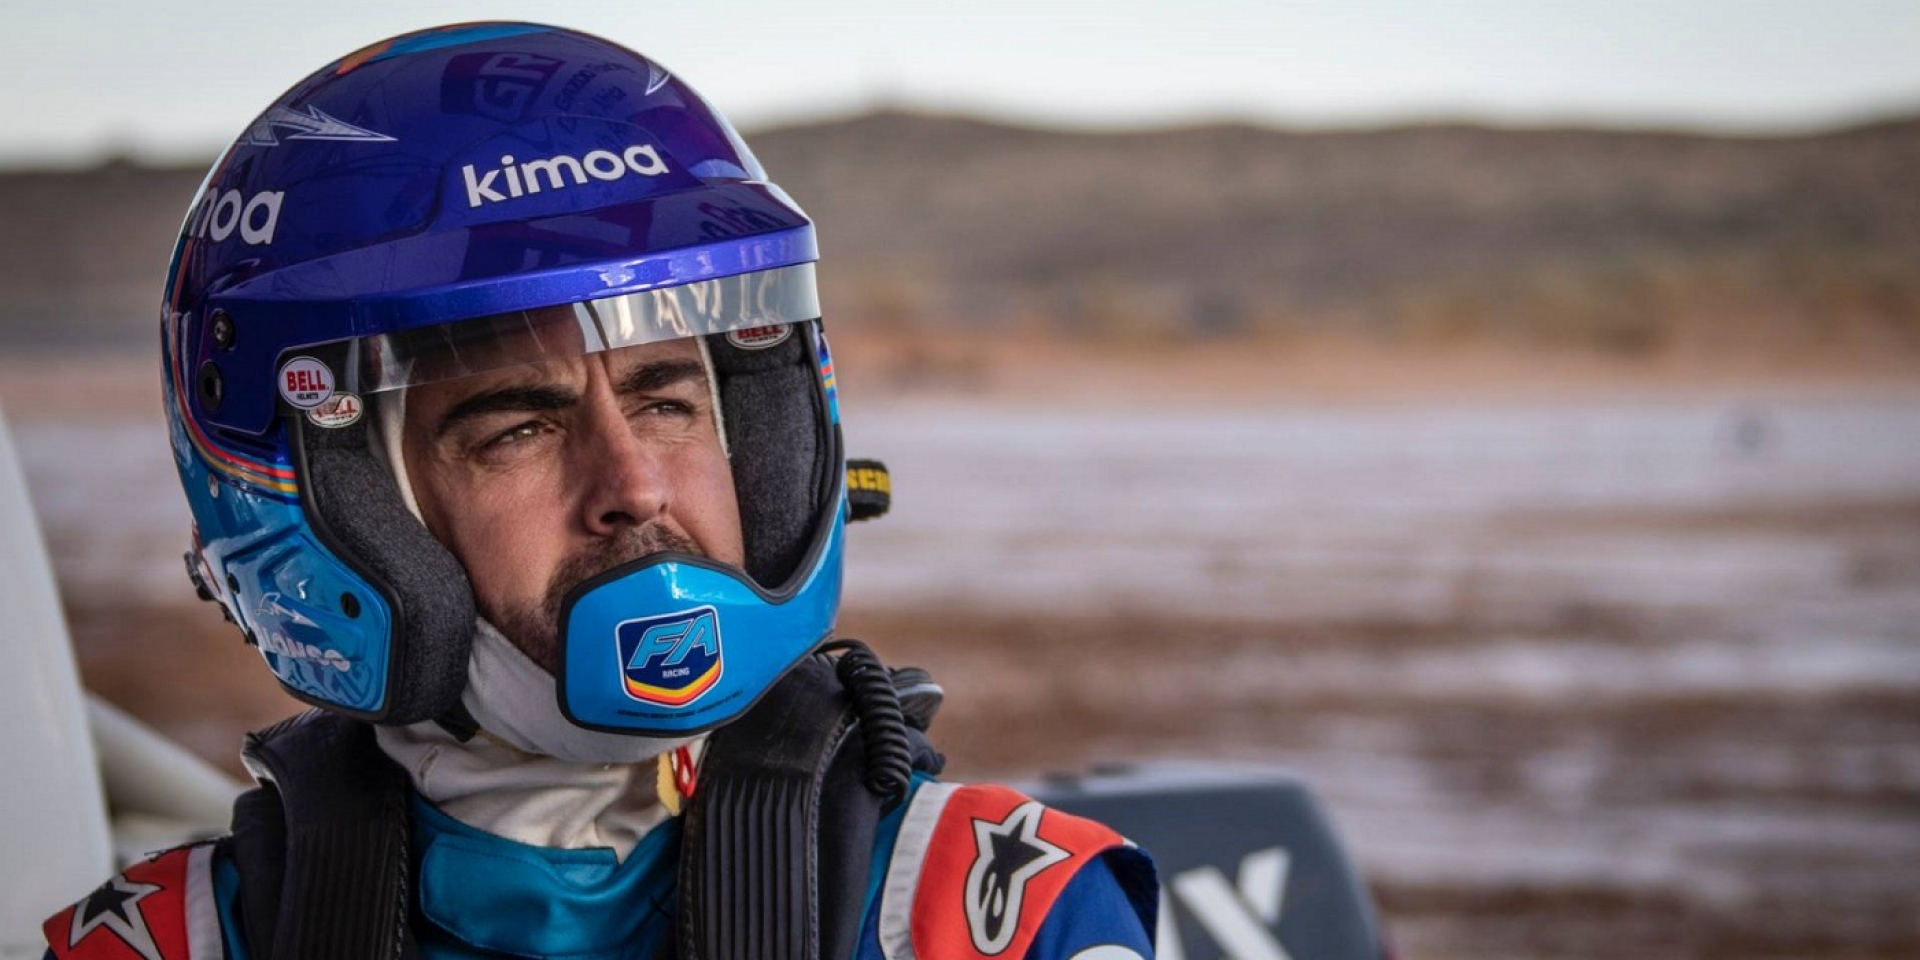 F1世界冠軍Fernando Alonso將挑戰Dakar Rally